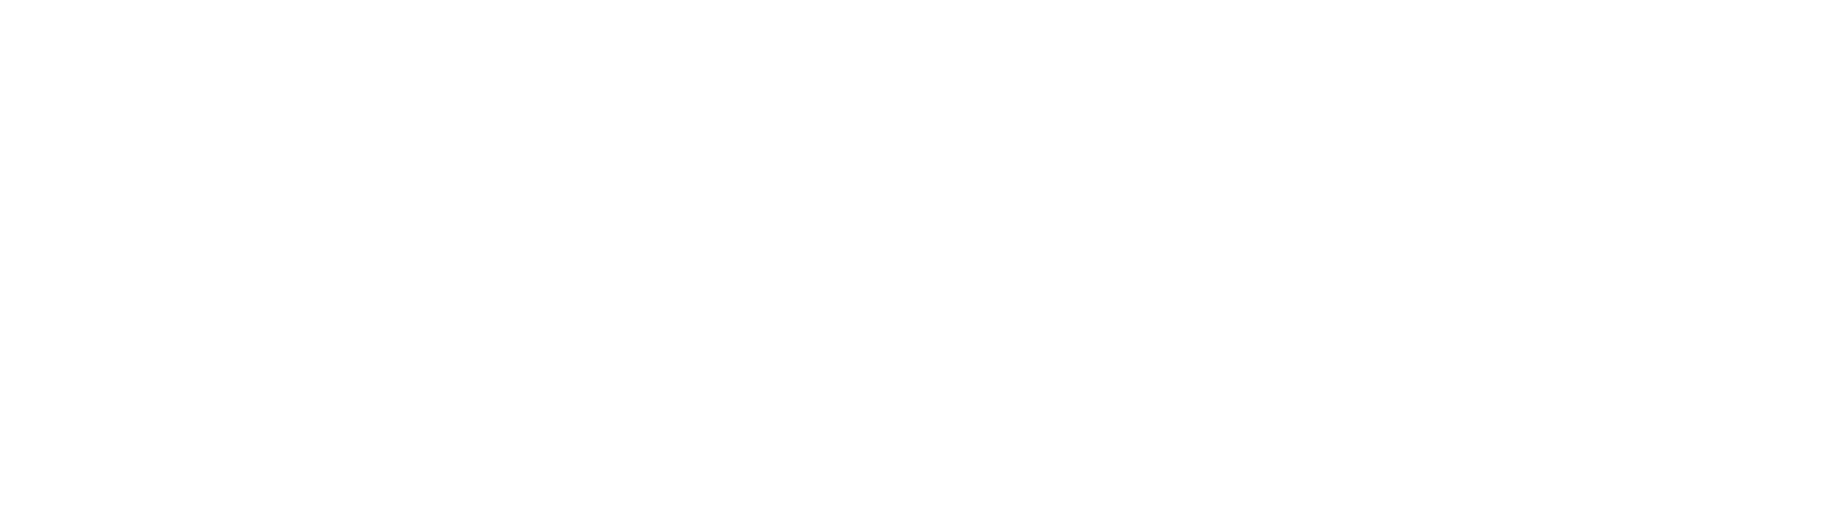 管家云企业网盘logo normal